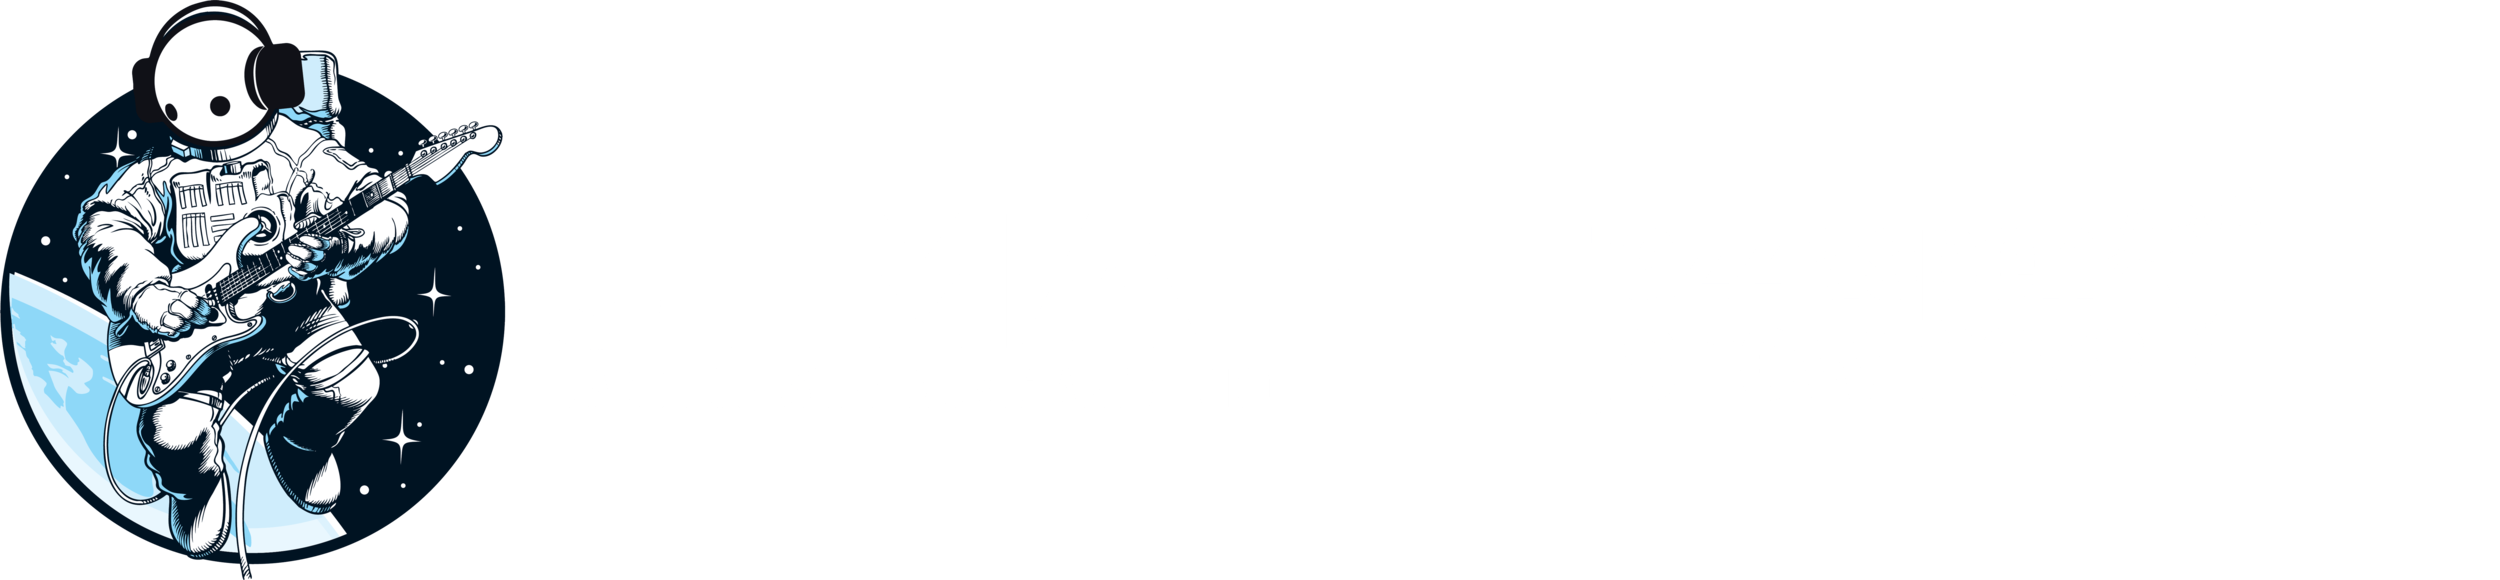 Jake Foerster Music Arts Fund